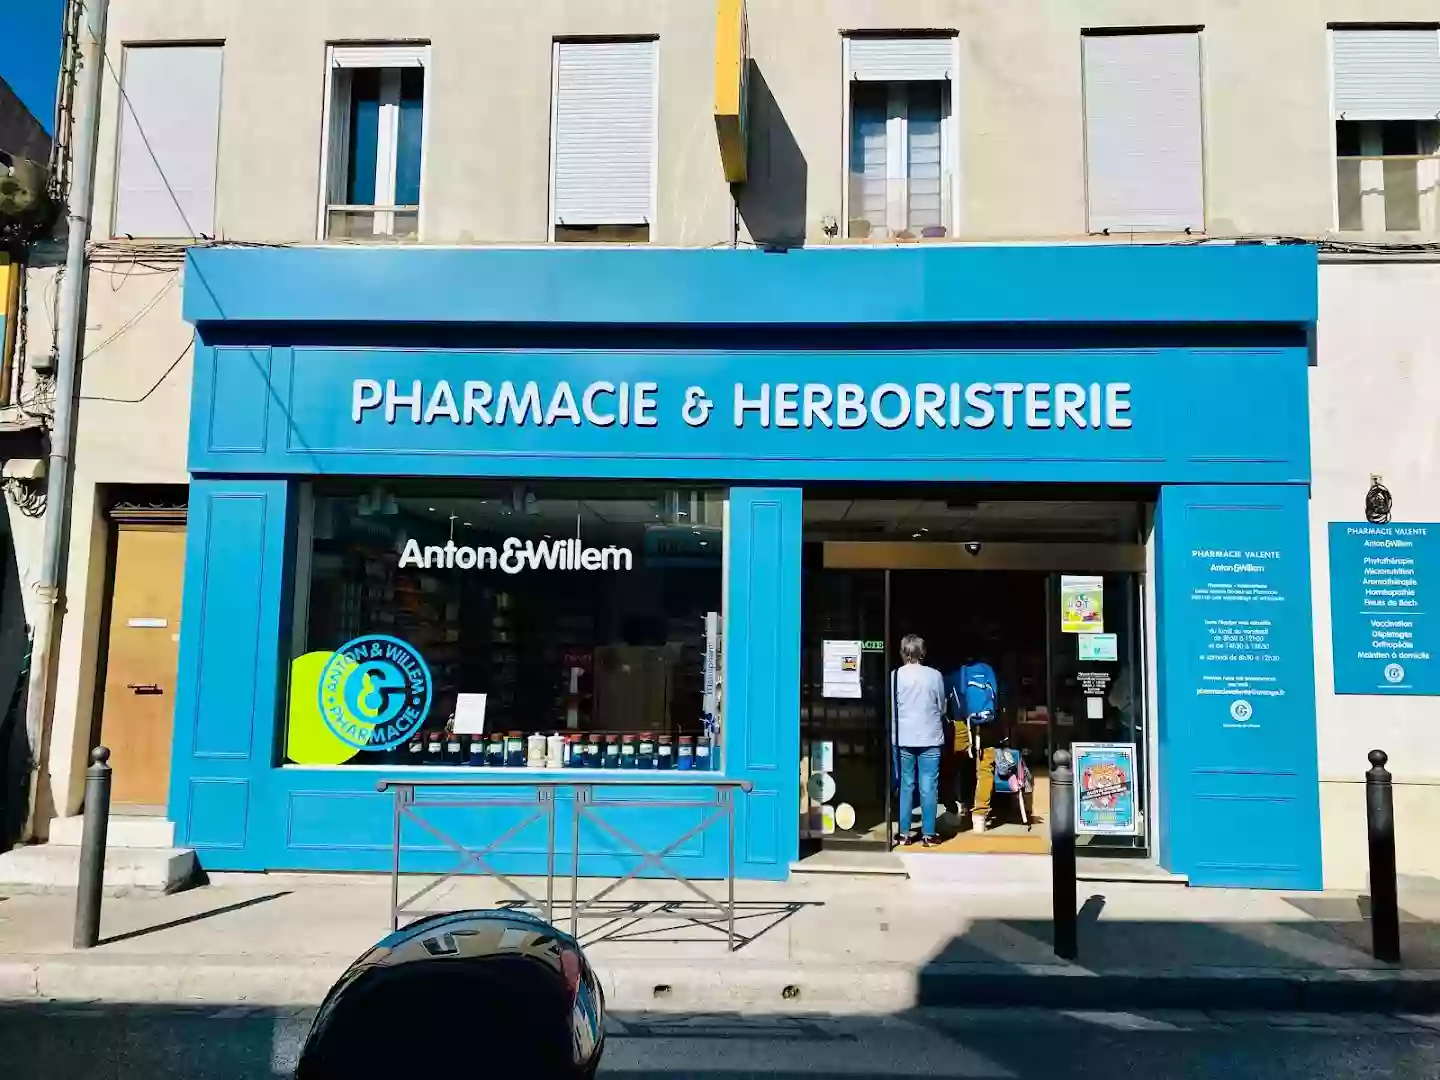 Pharmacie Herboristerie Valente - Anton&Willem